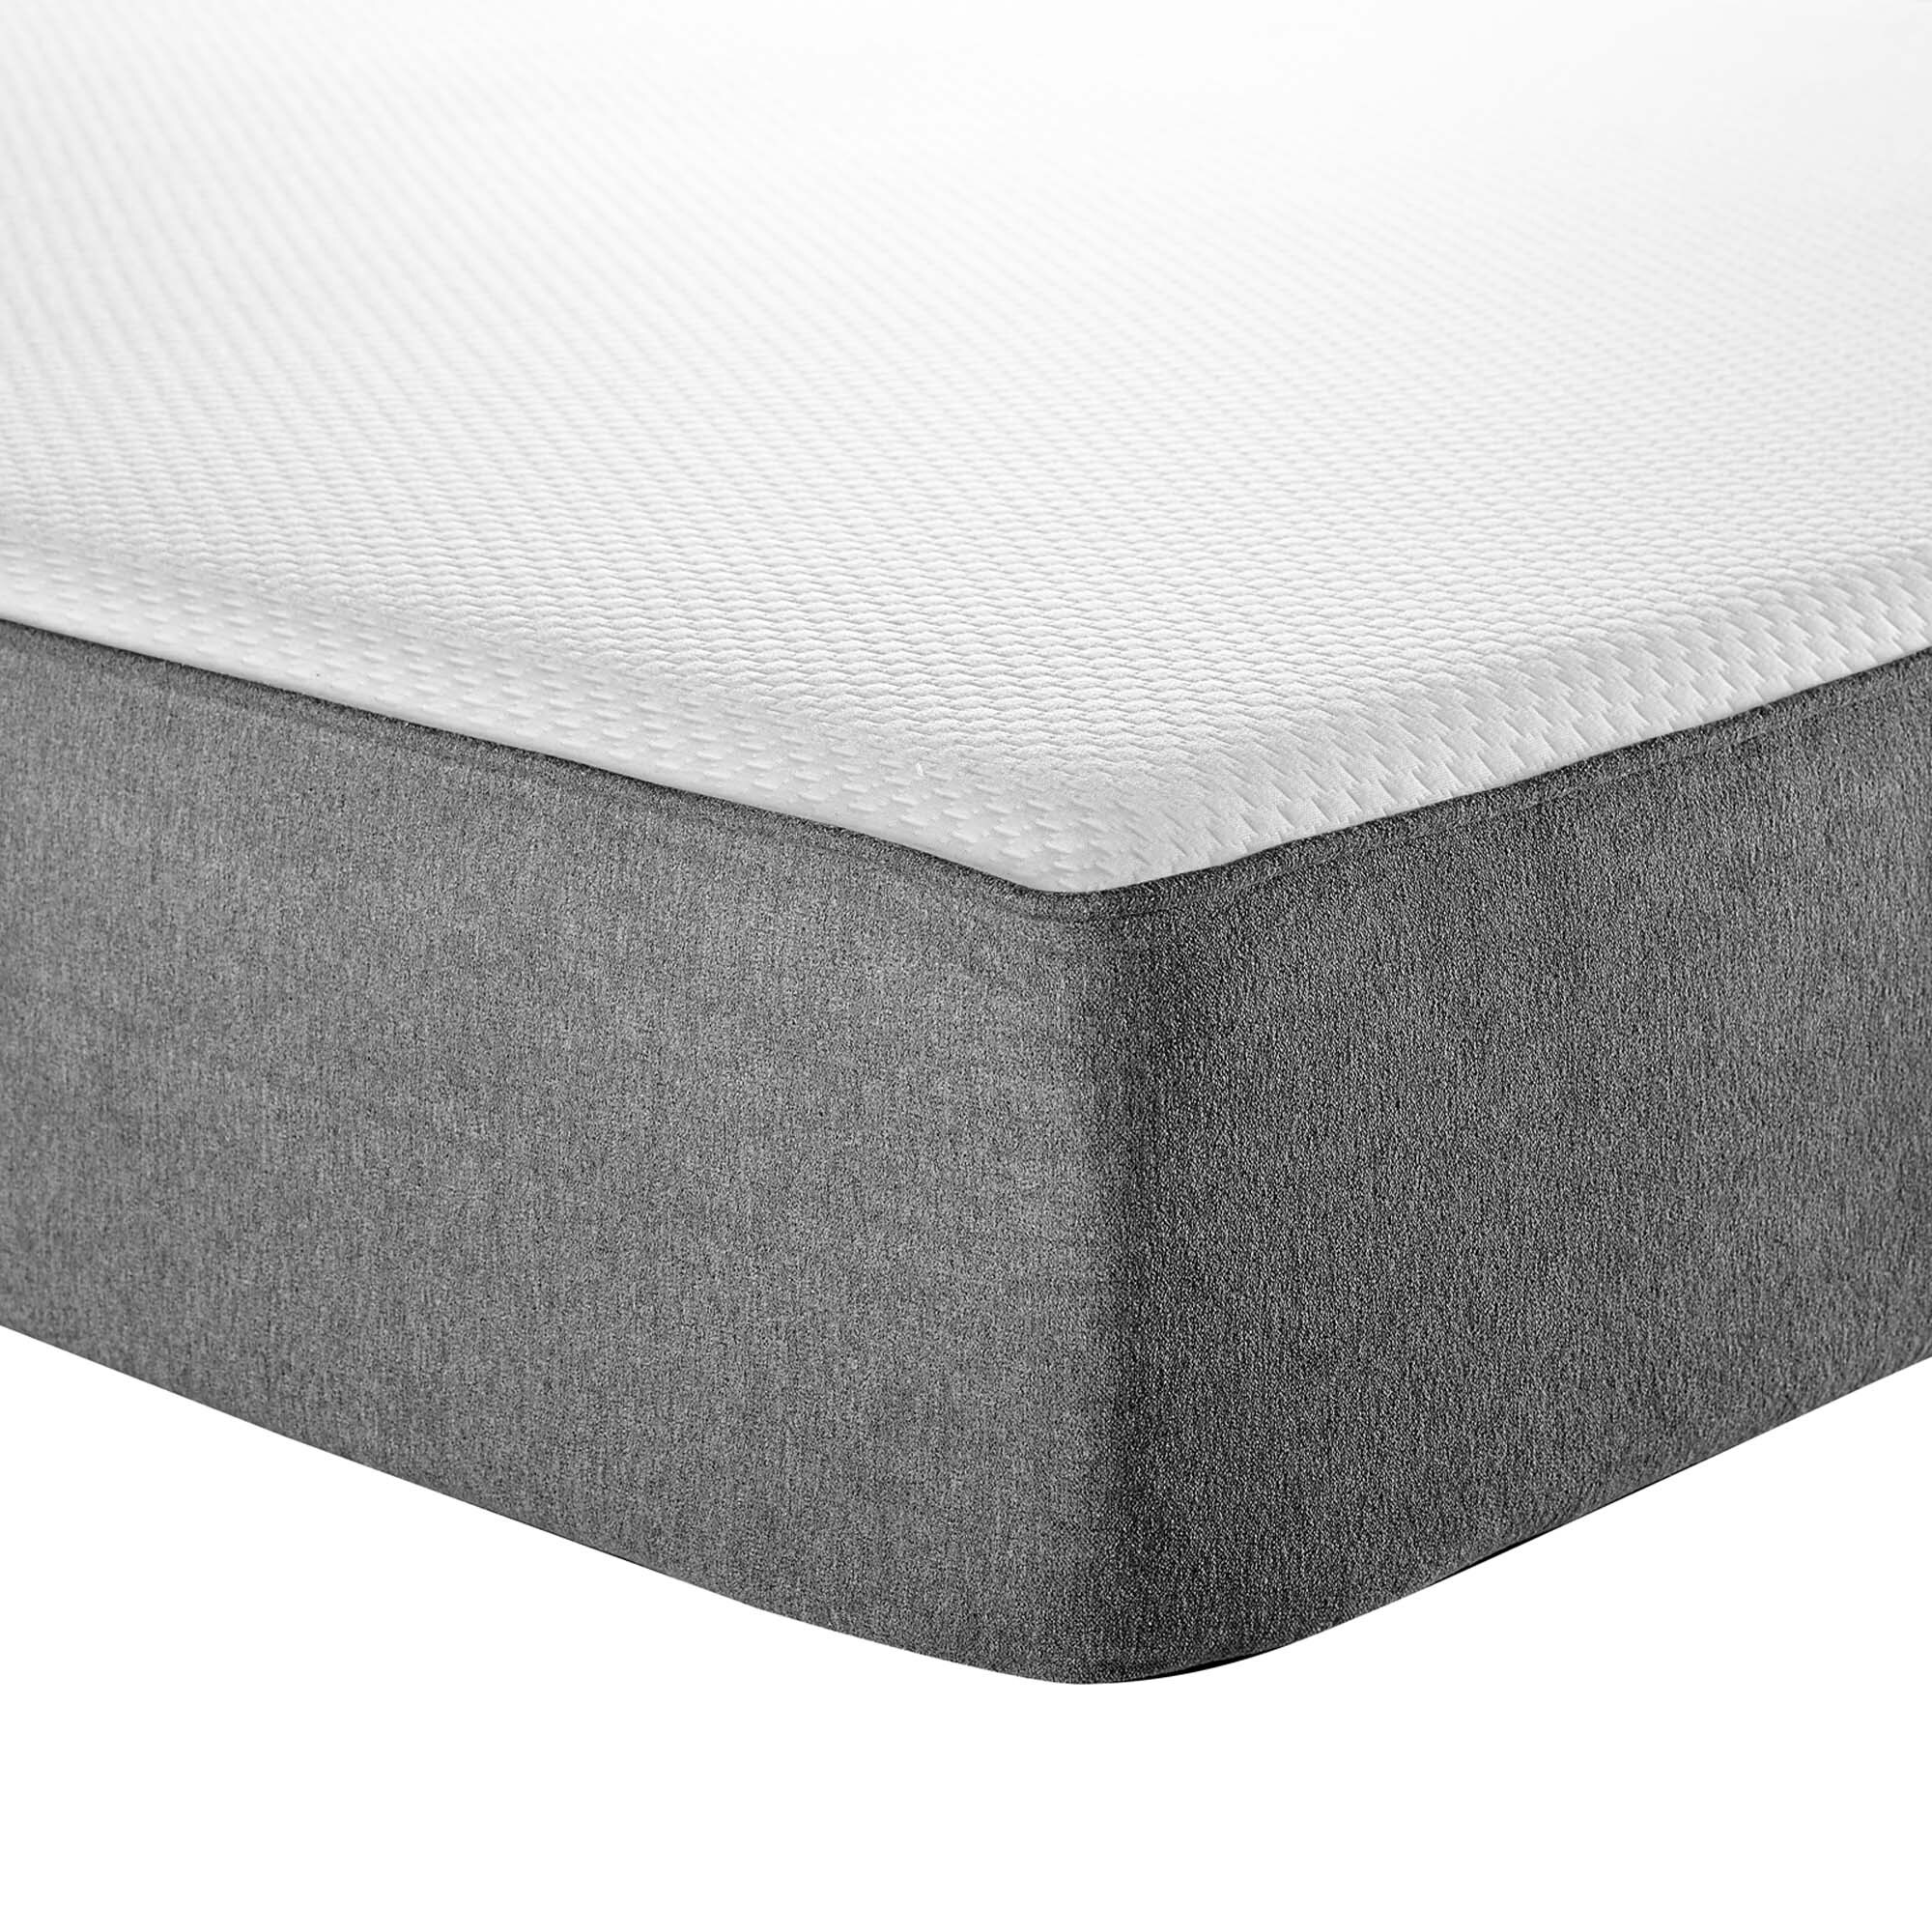 Wa- 7 contour flex, medium, memory foam - Bed Mattress Furniture Warehouse  .com